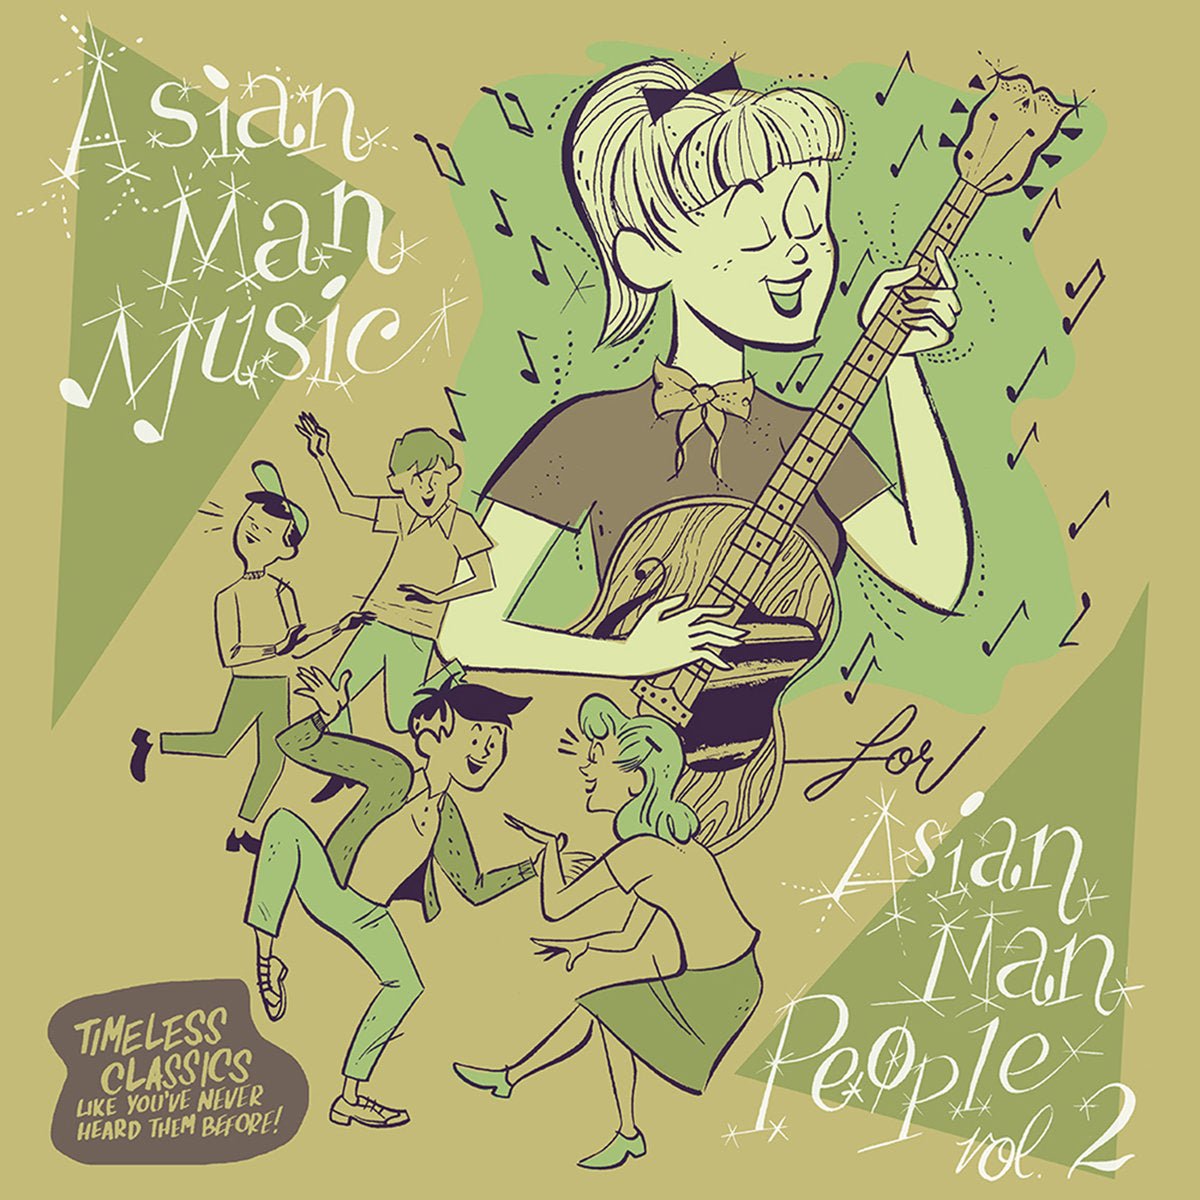 V/A - Asian Man Music for Asian Man People LP - Vinyl - Asian Man